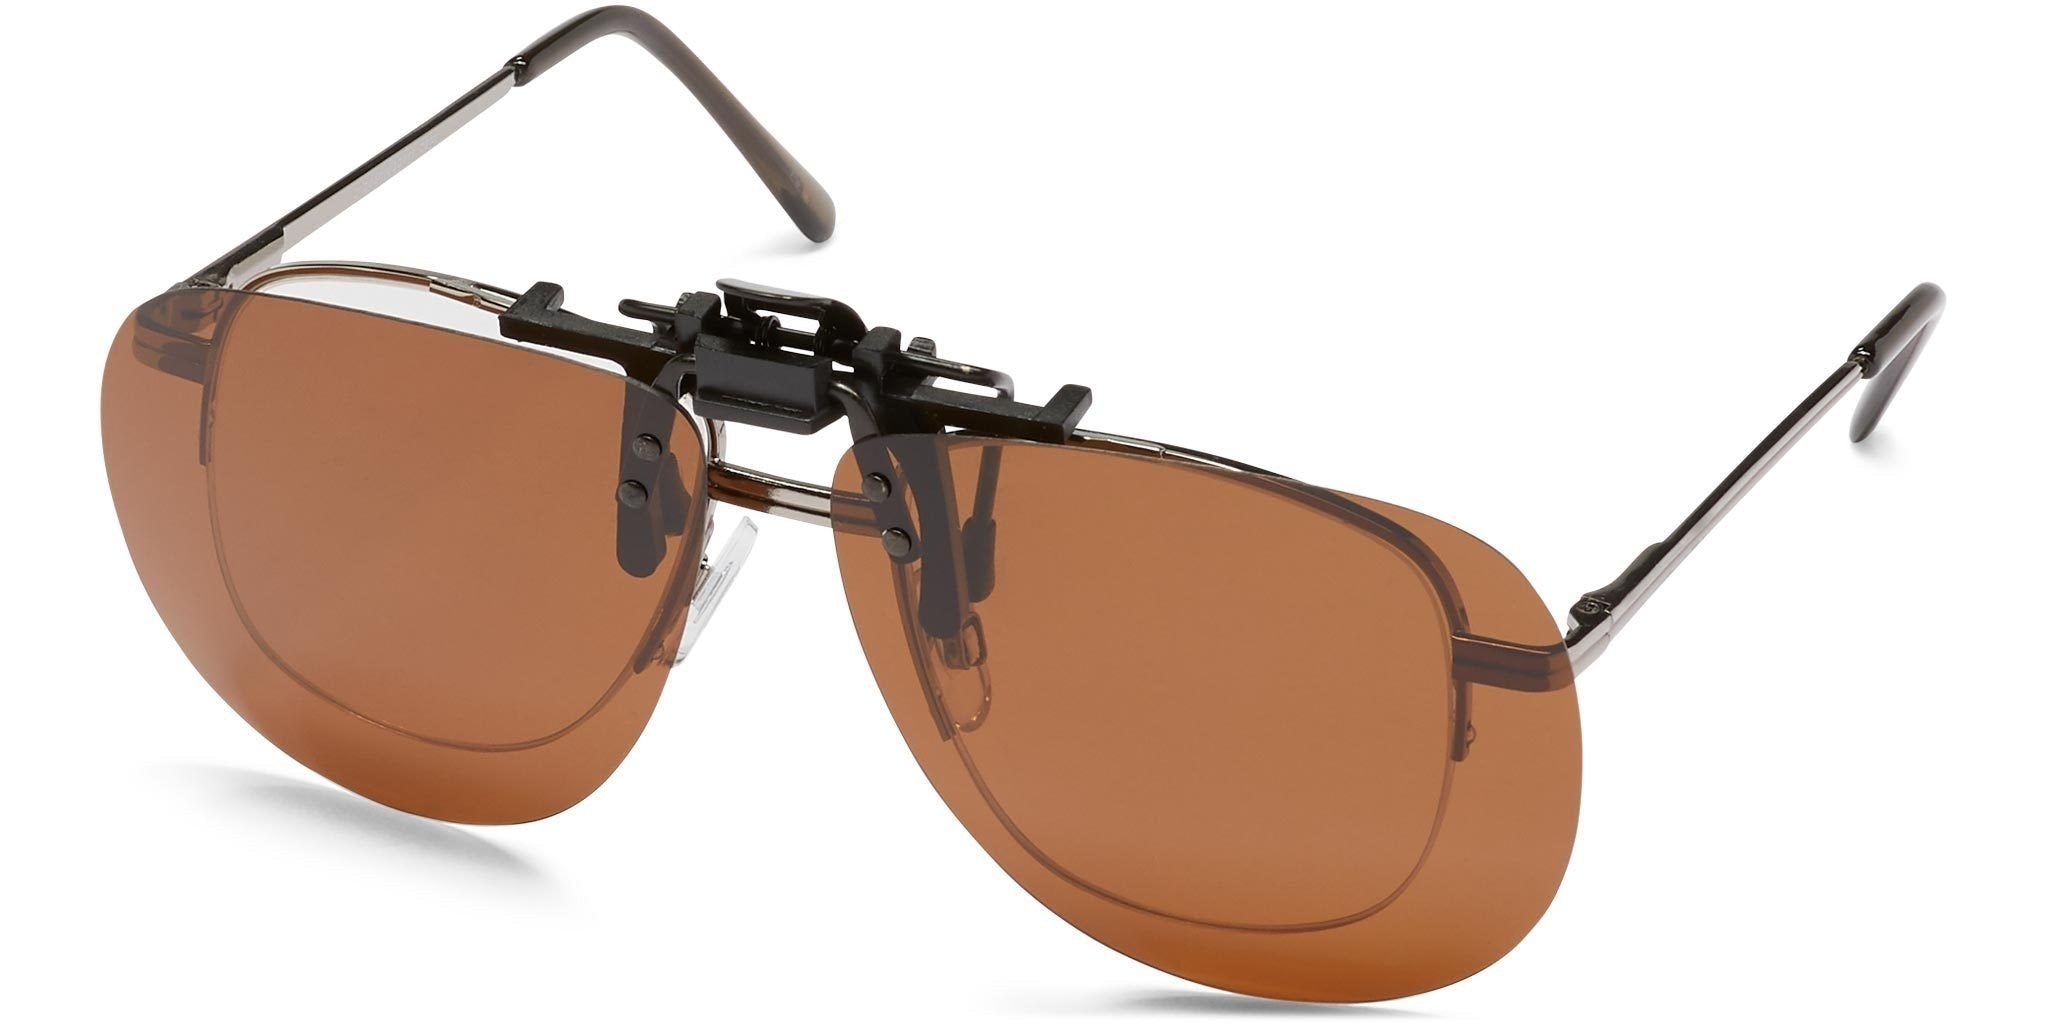 Collega Implicaties referentie ICU Eyewear - Clip-&-Flip Aviator Polarized Sunglasses Fisherman Eyewear